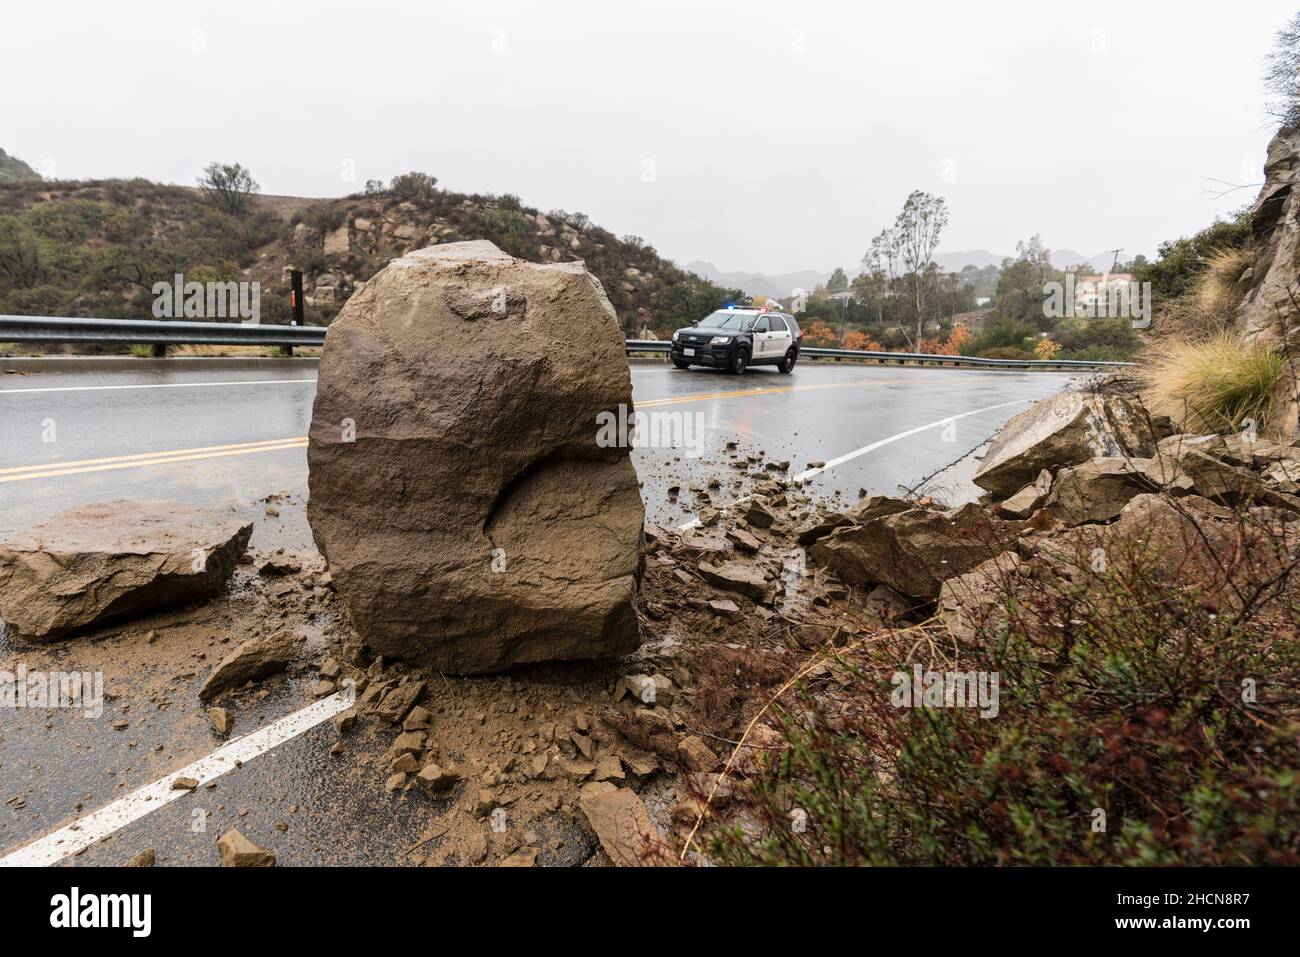 Los Angeles, California, USA - December 30, 2021:  Los Angeles Police car responding to rain storm landslide blocking traffic lane. Stock Photo